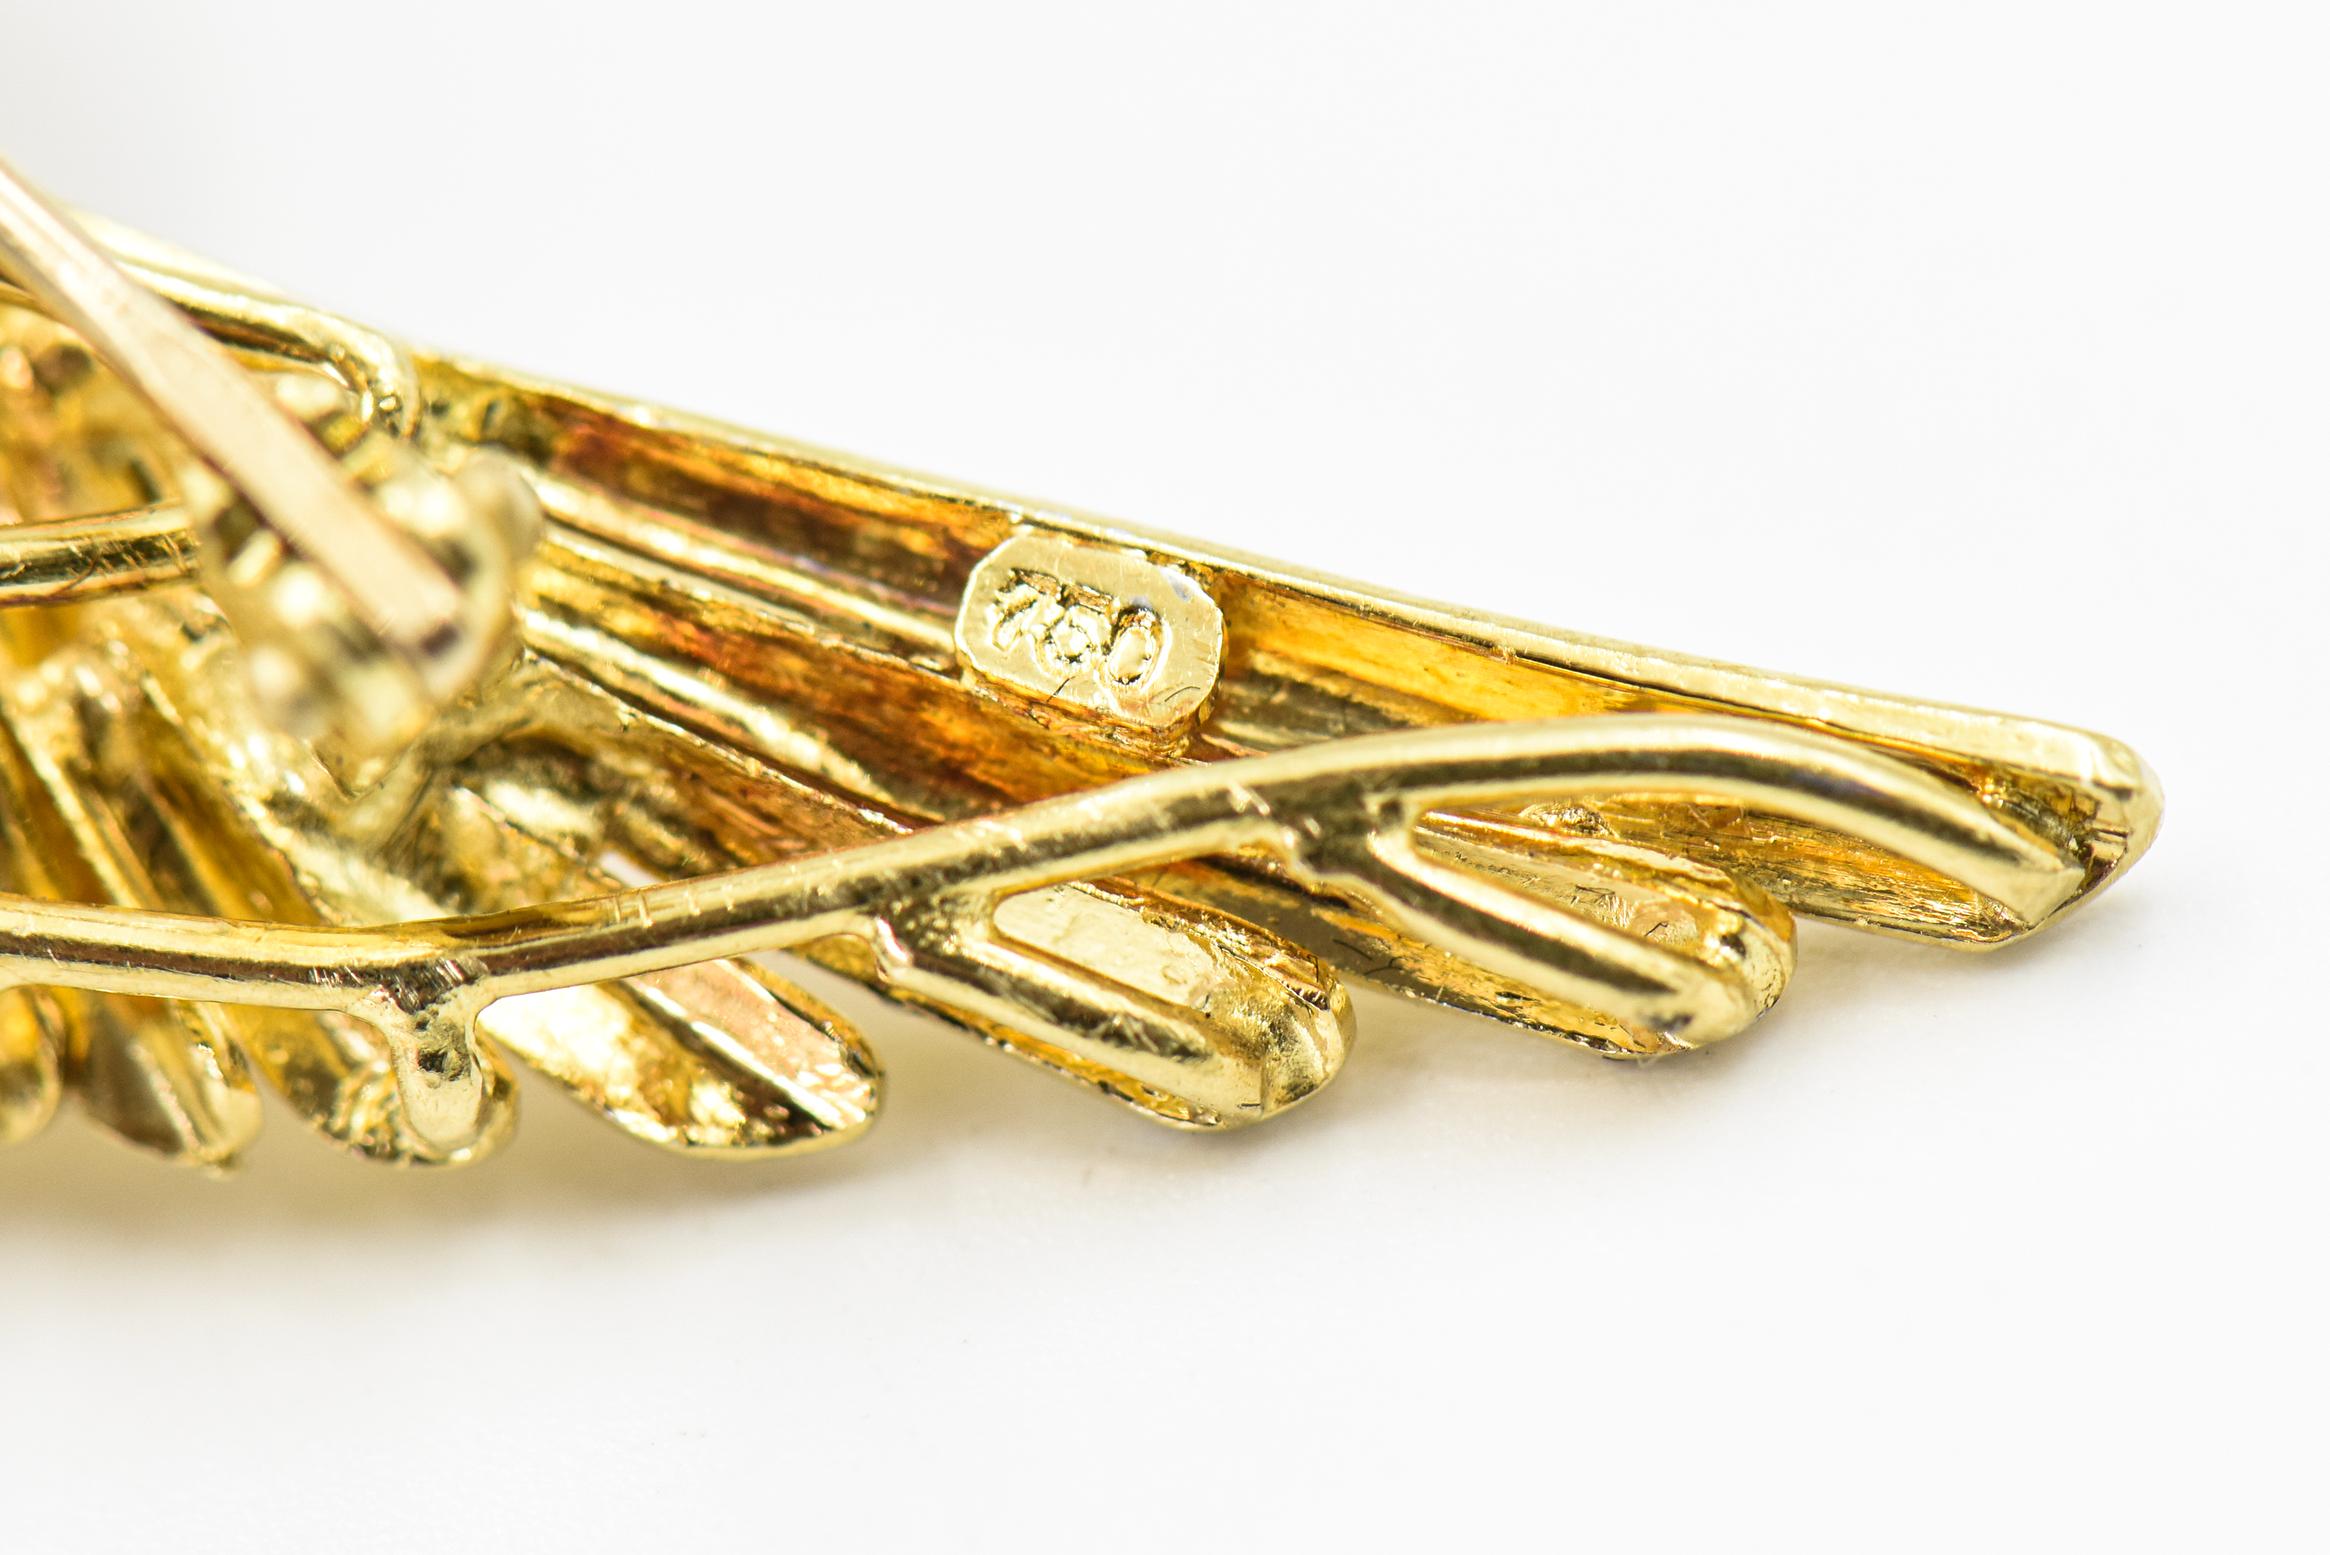 Round Cut Jeweled Hummingbird Bird Brooch Yellow Gold with Diamonds Rubies and Emeralds